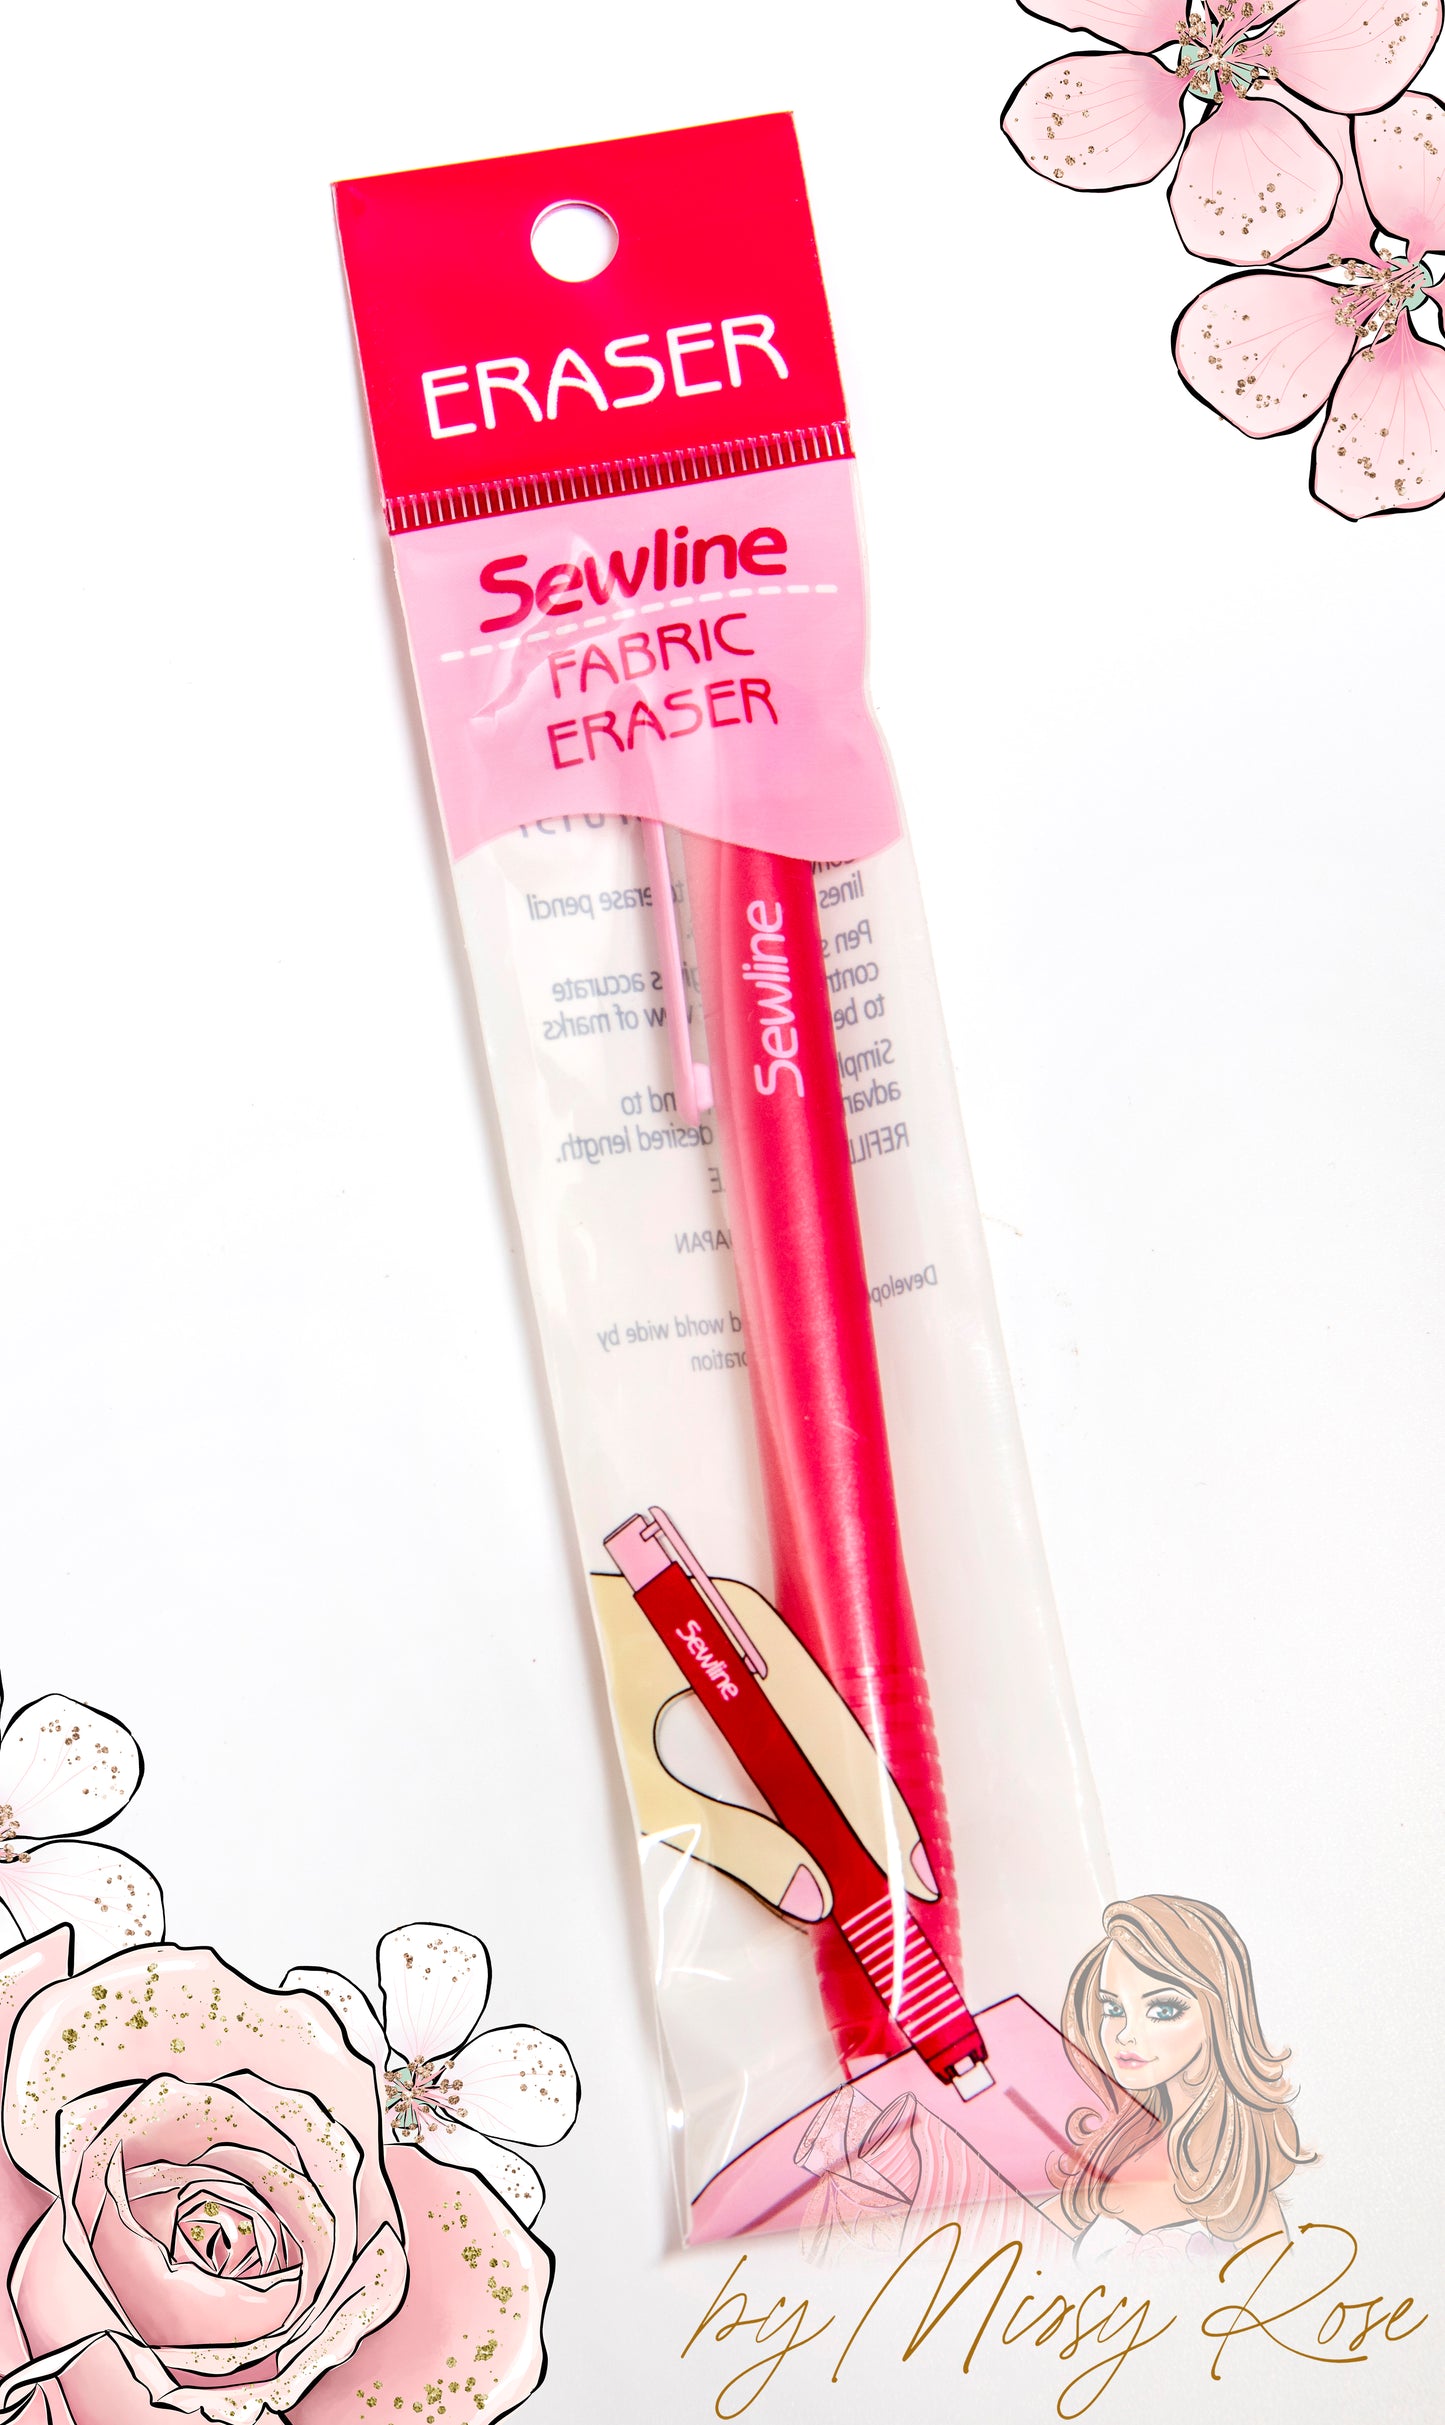 Sewline - Fabric Eraser